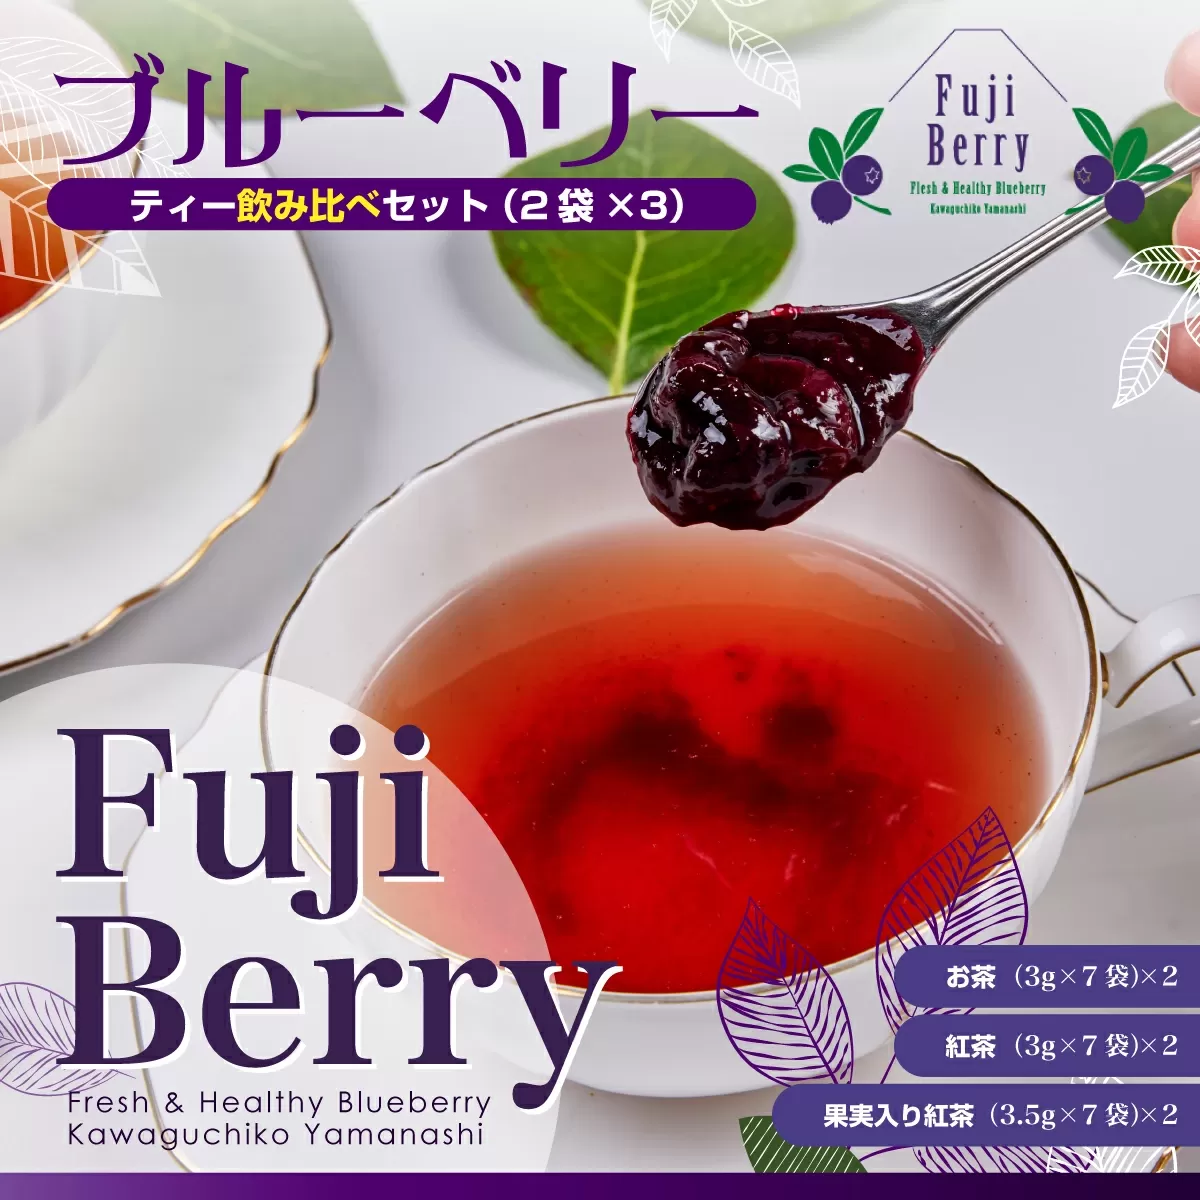 Fuji Berry ブルーベリーティー飲み比べセット(2袋×3) FAZ102